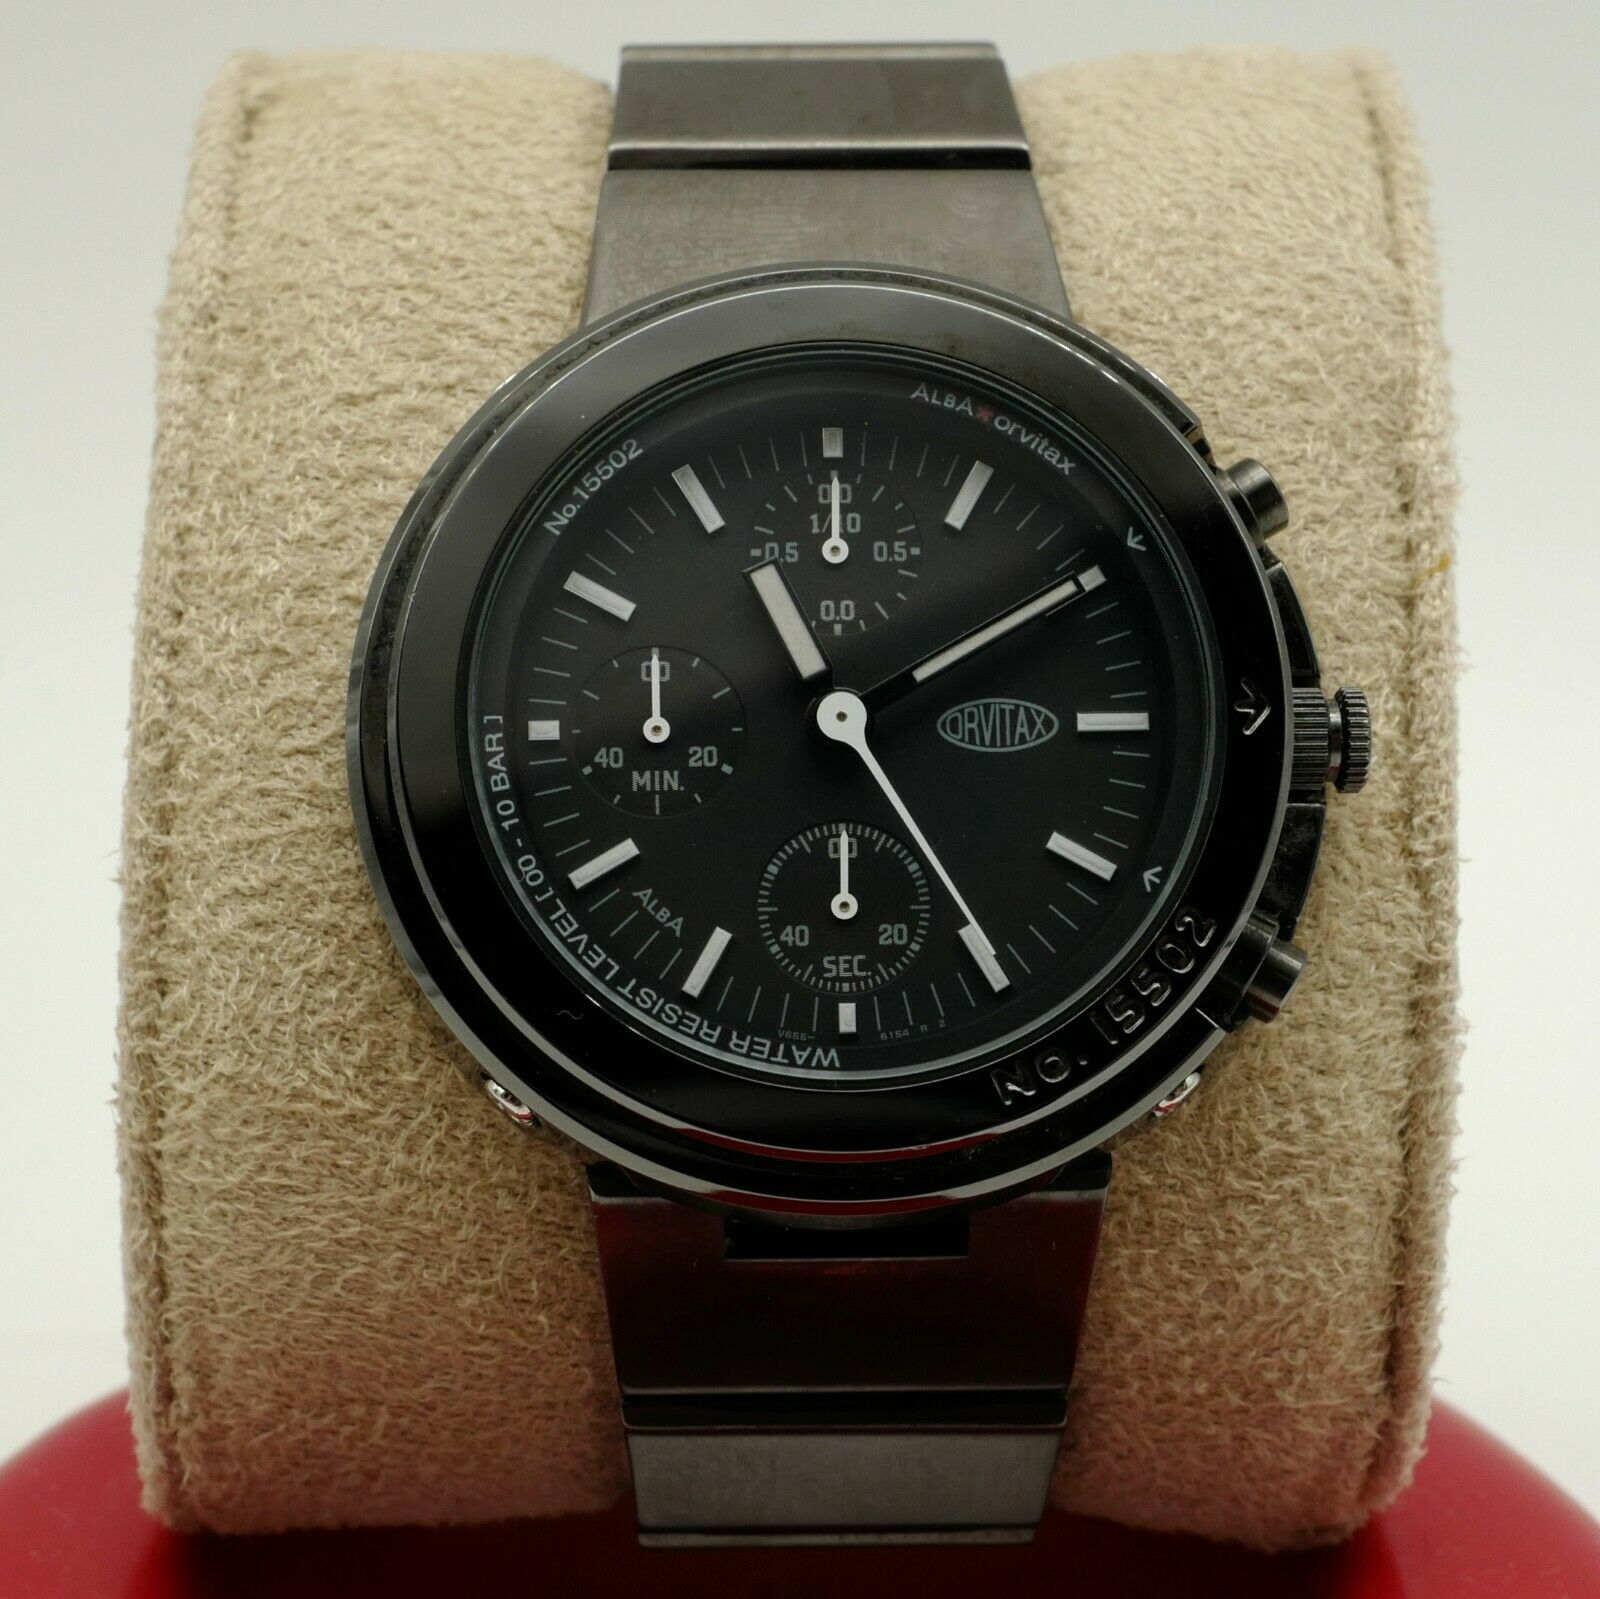 Seiko Alba Orvitax 15502 (black shroud) V655-6110 watch